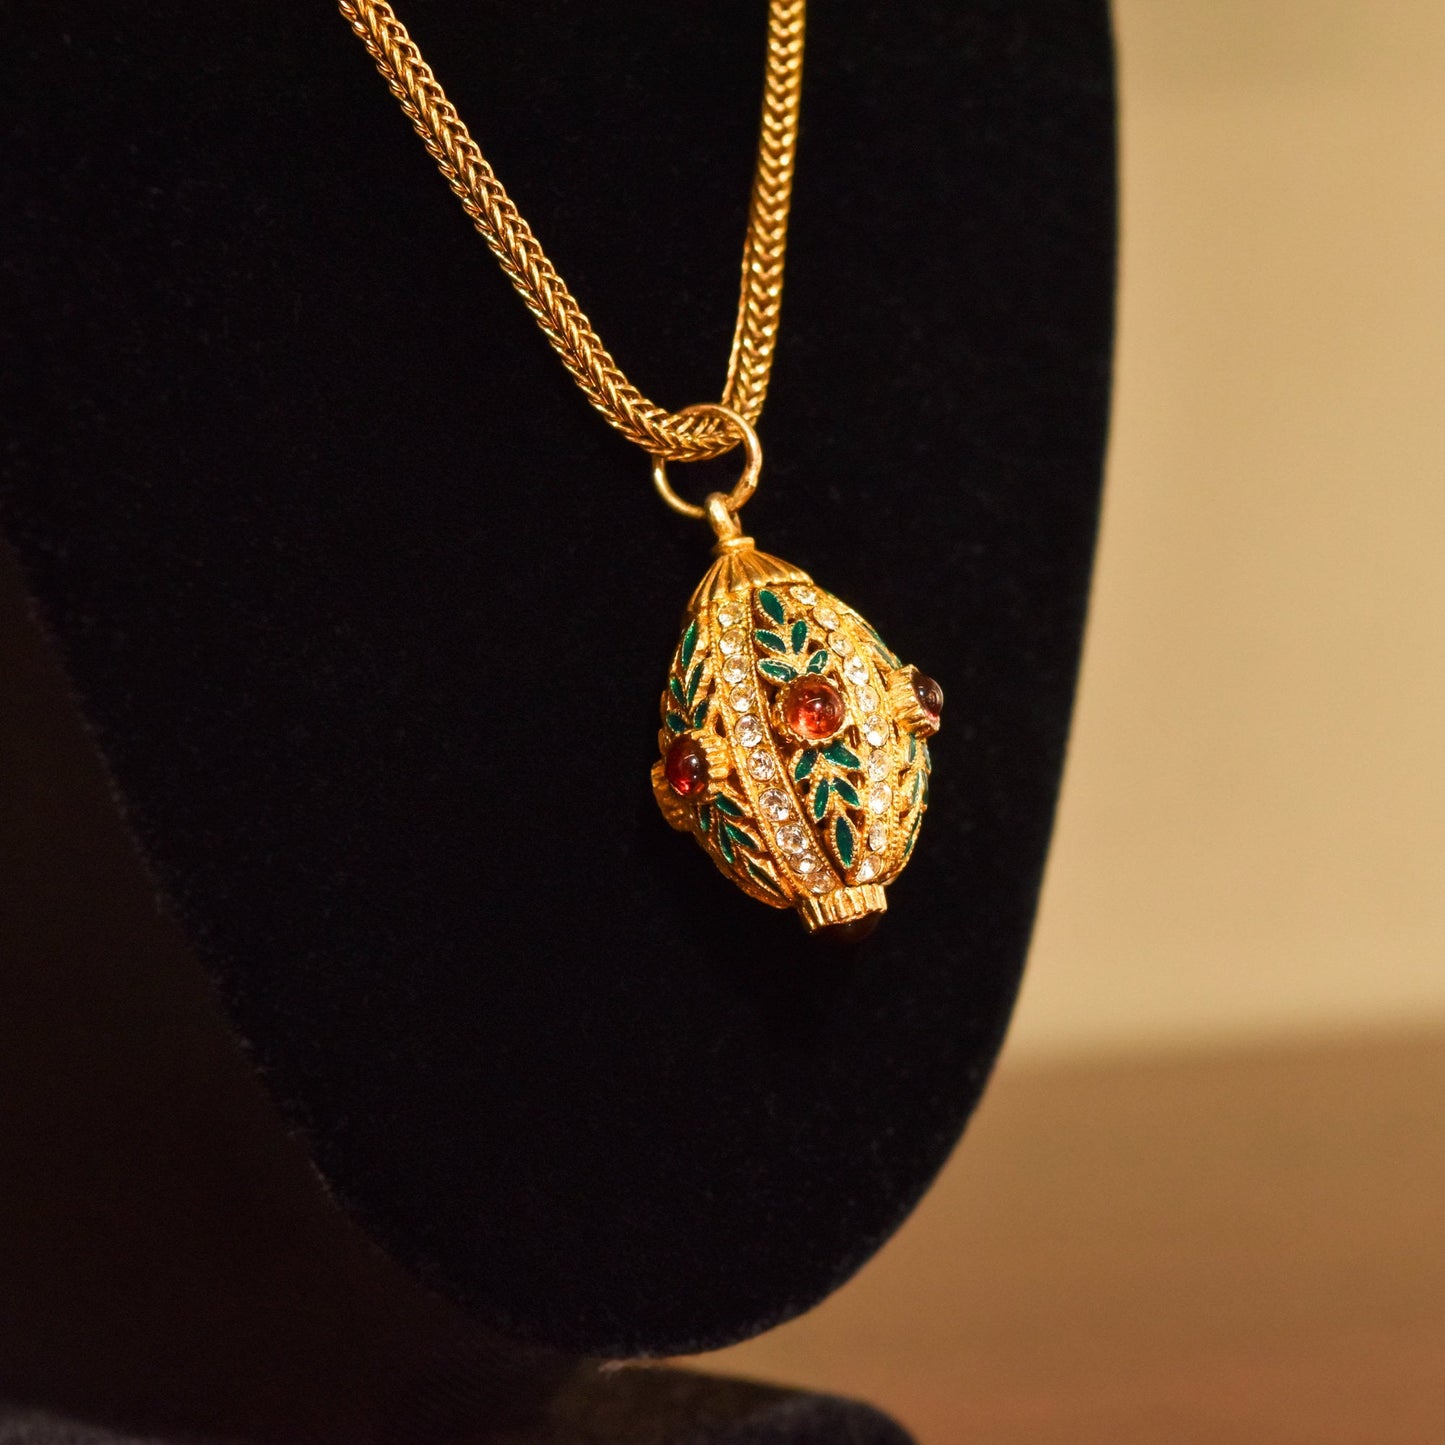 Russian Faberge Egg Charm Pendant, Enamel & Swarovski Crystals, Estate Jewelry, 32mm